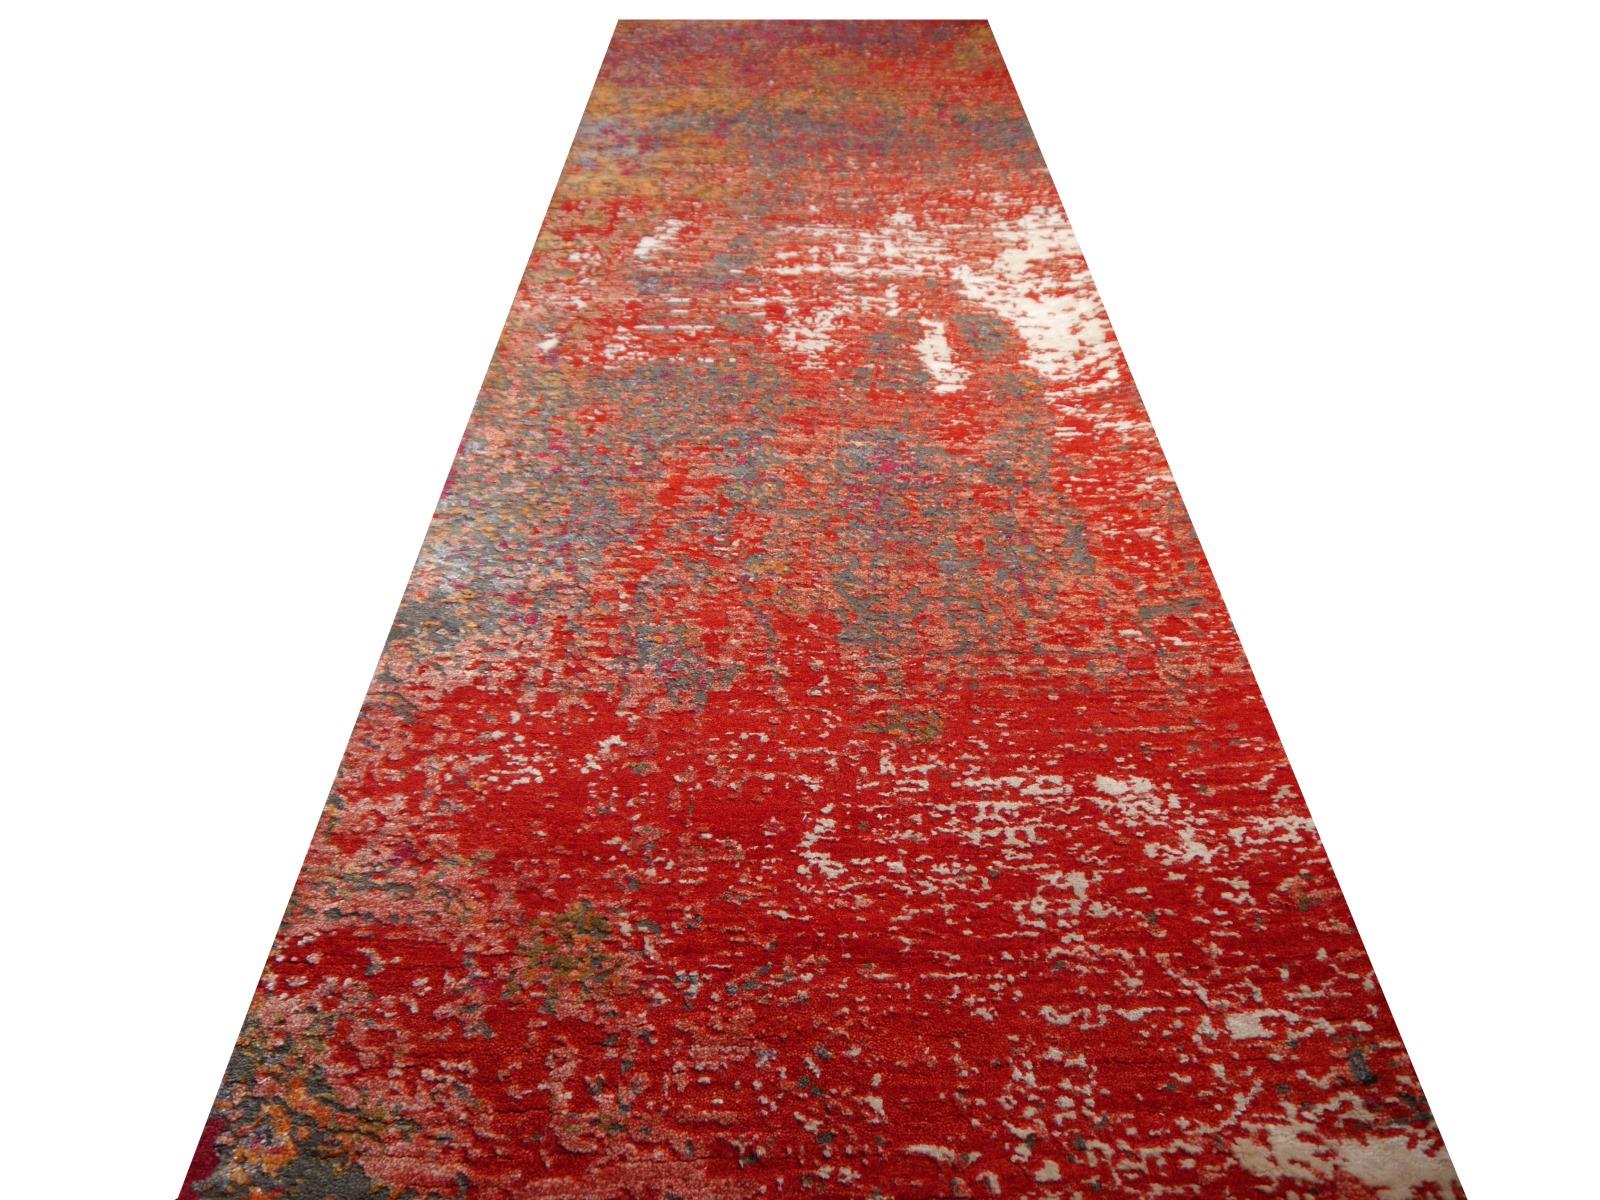 A stunning modern hallway runner rug in contemporary design.

Design: Modern
Collection: Anastasia by Djoharian Design
Size: 300 x 80 cm, 9.6 x 2.7 ft, no fringes / tassels. 
Materials: Wool, bamboo silk (higher pile, 3D look)
Size: Hallway